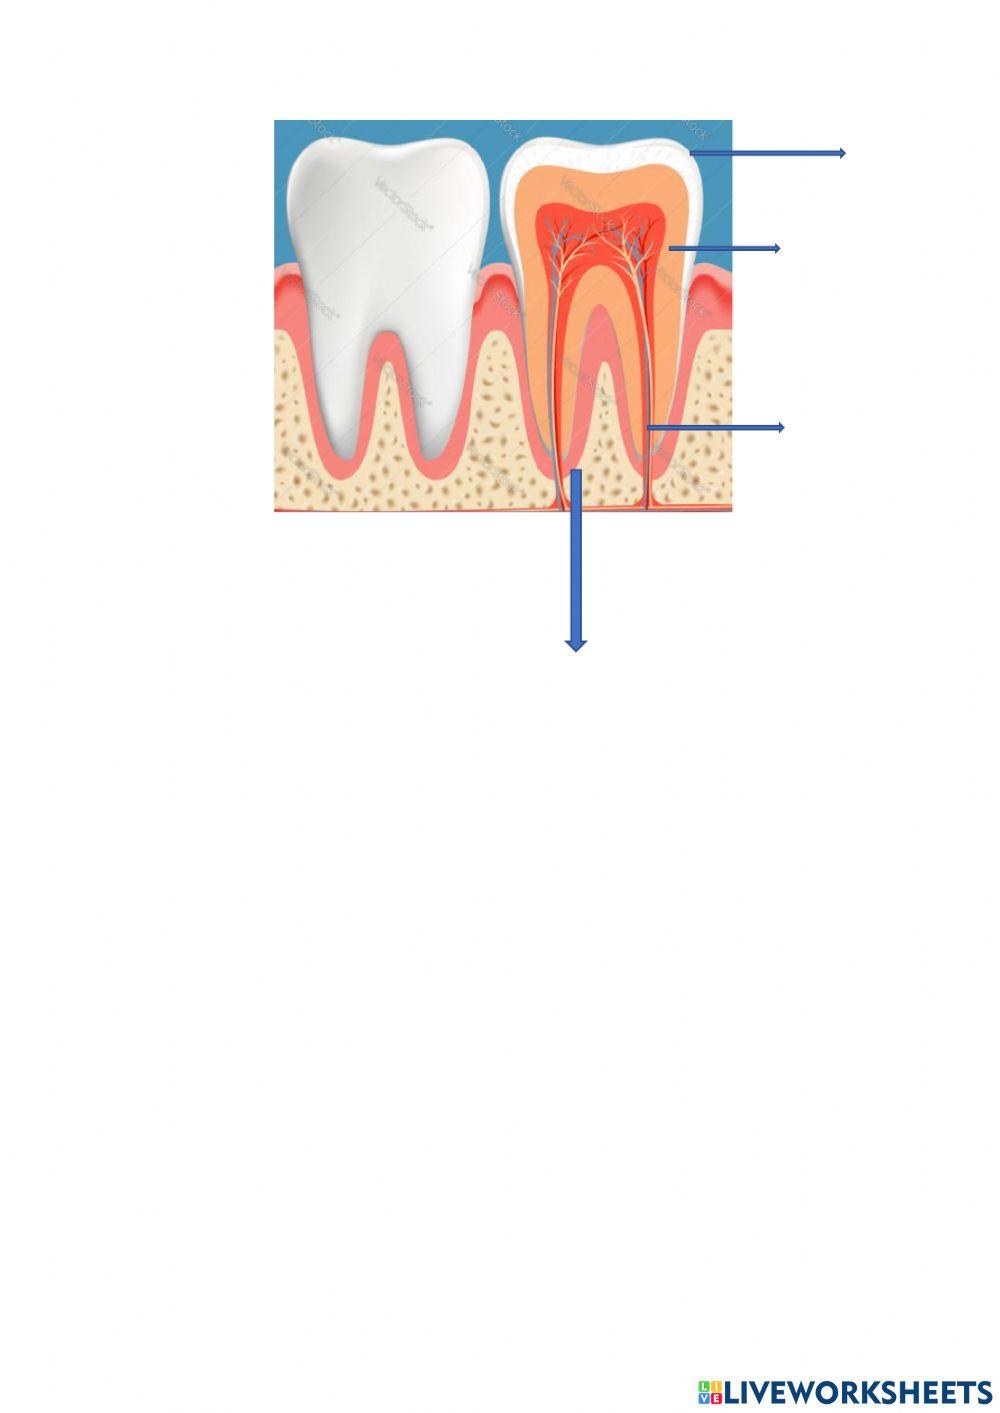 Structer of teeth